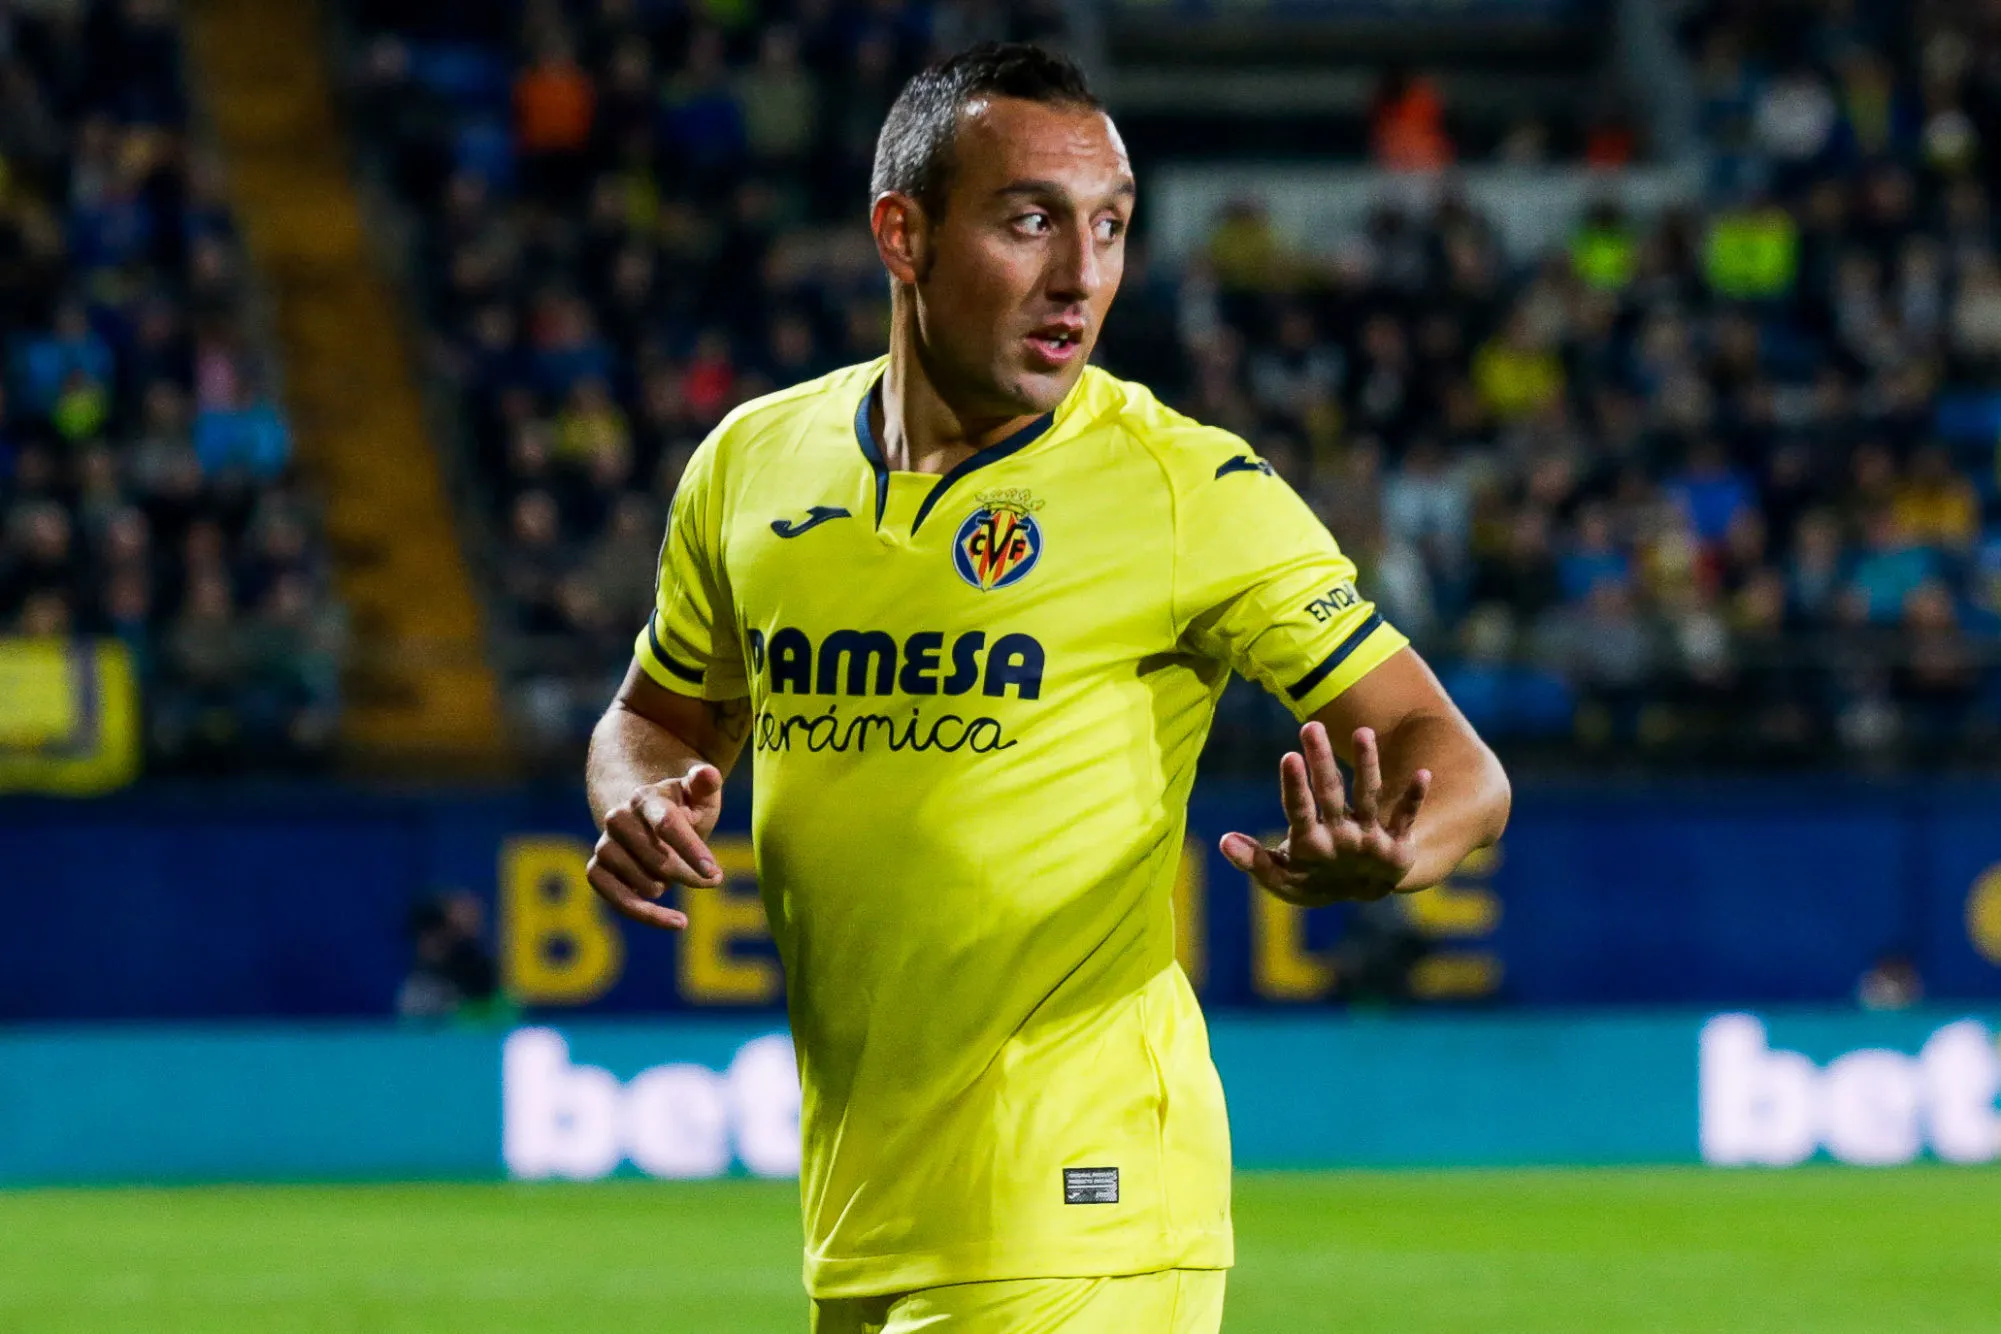 Pronostic Villarreal Eibar : Analyse, prono et cotes du match de Liga